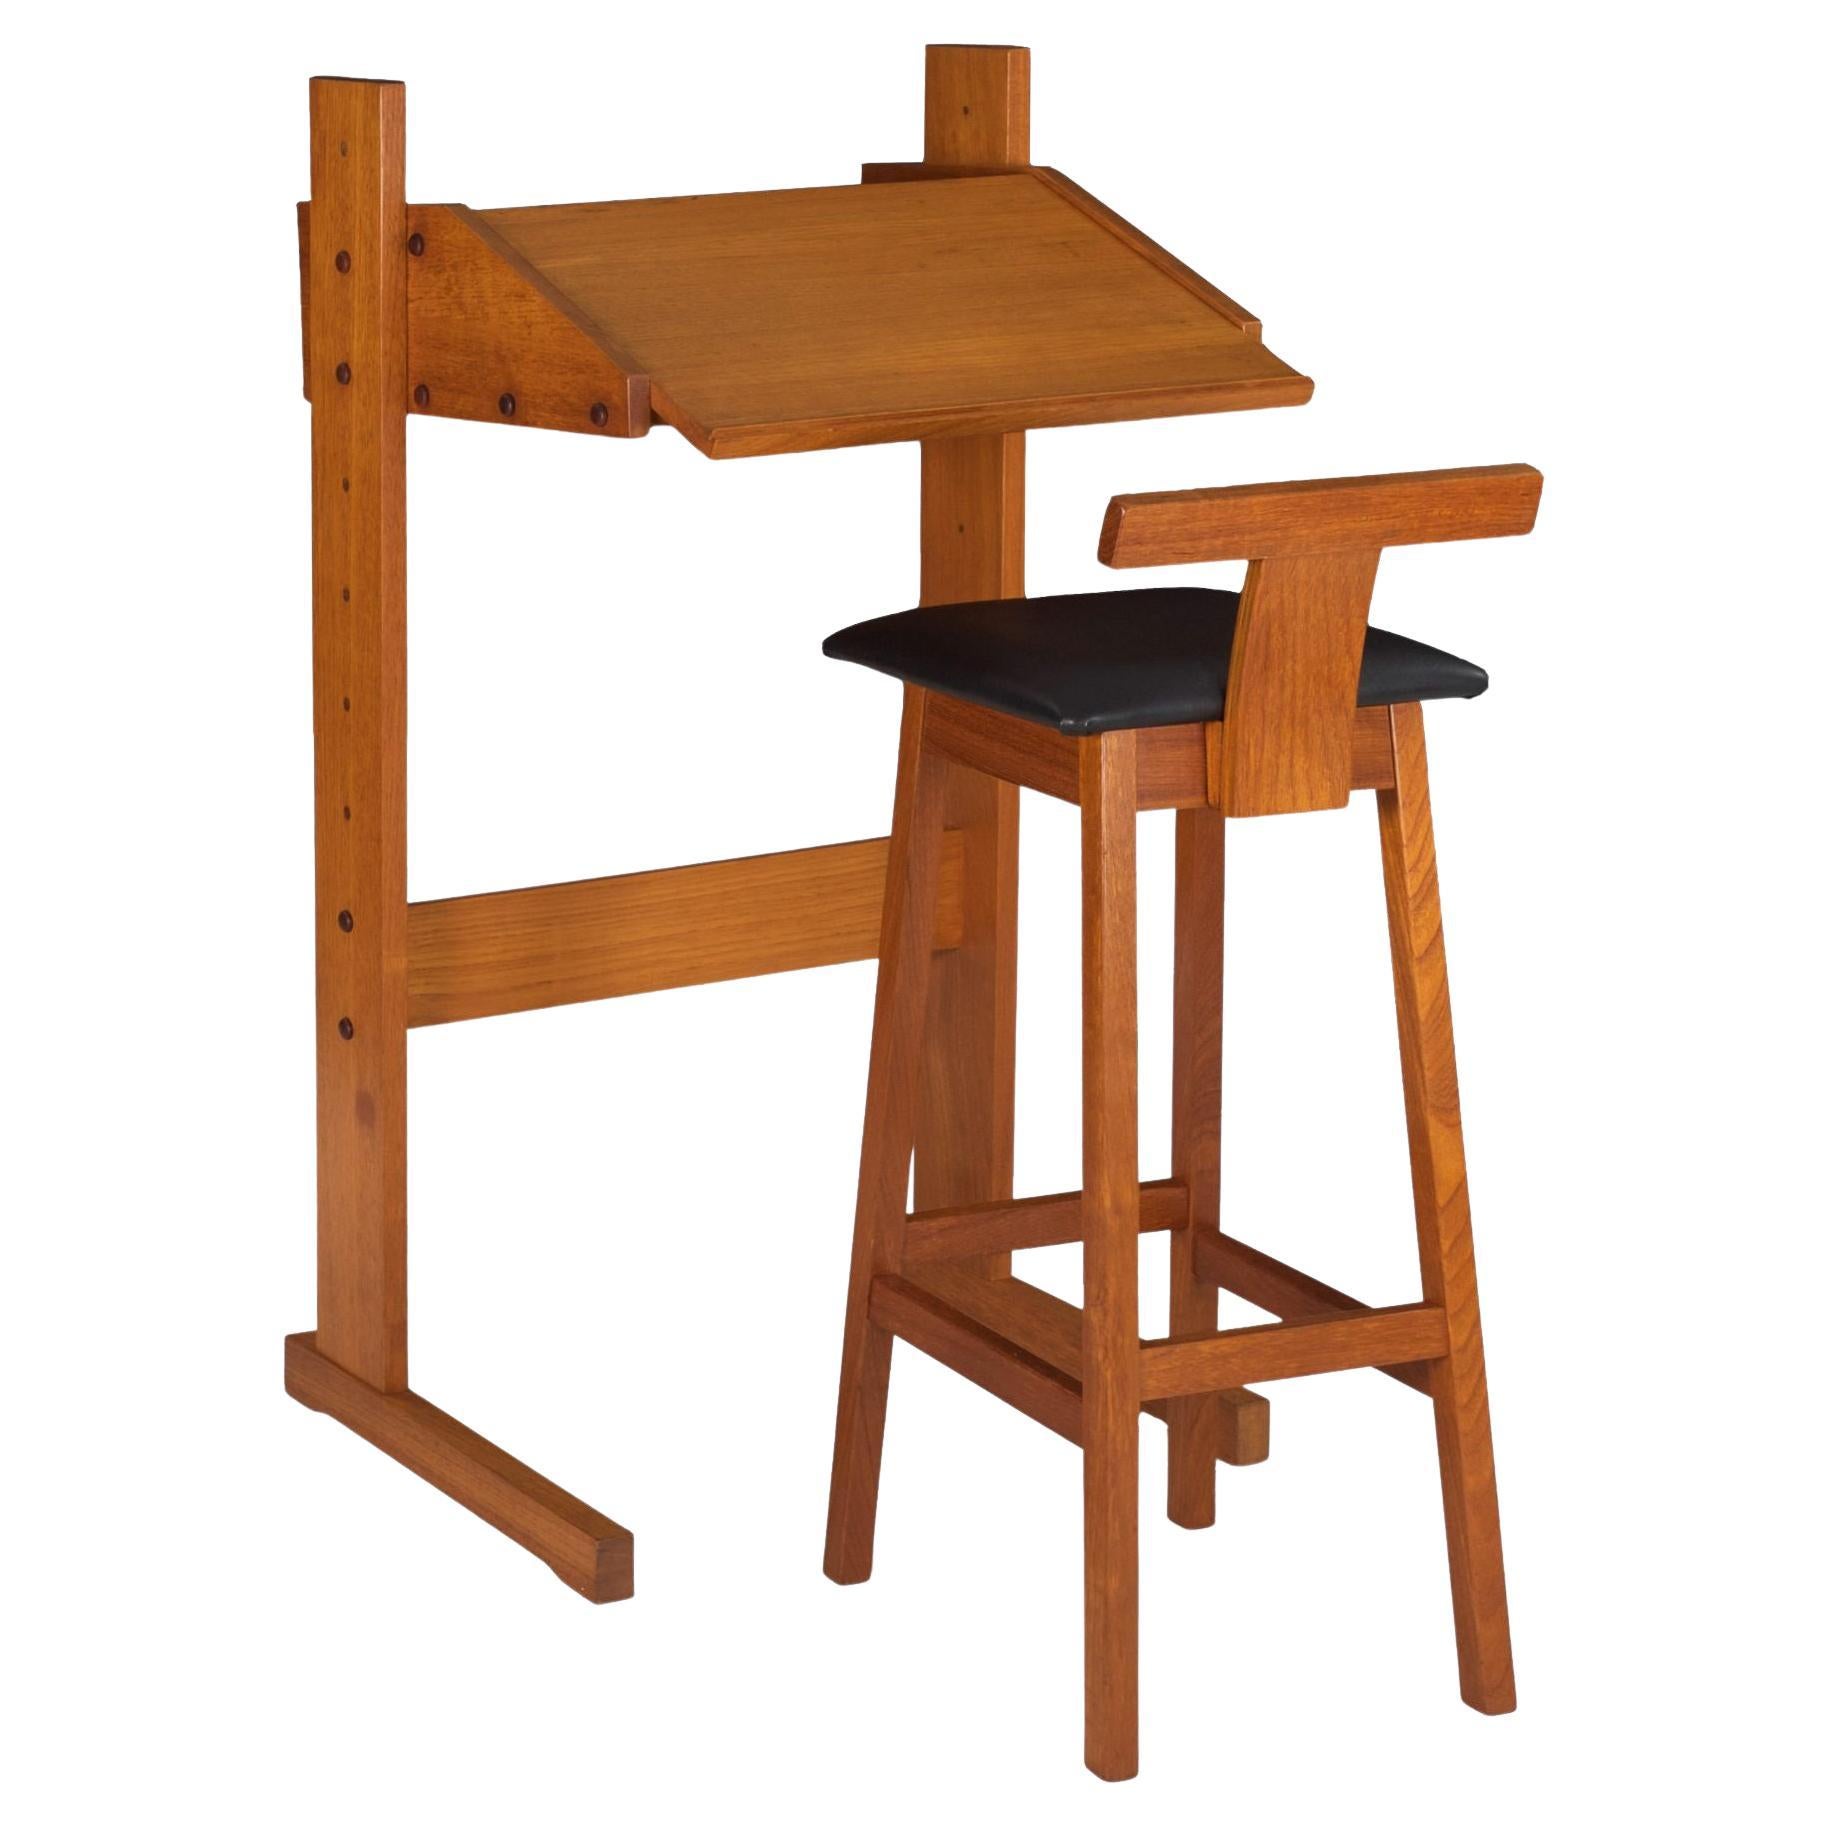 Danish Mid Century Modern Adjustable-Height Teak Desk and Chair circa 1960s For Sale